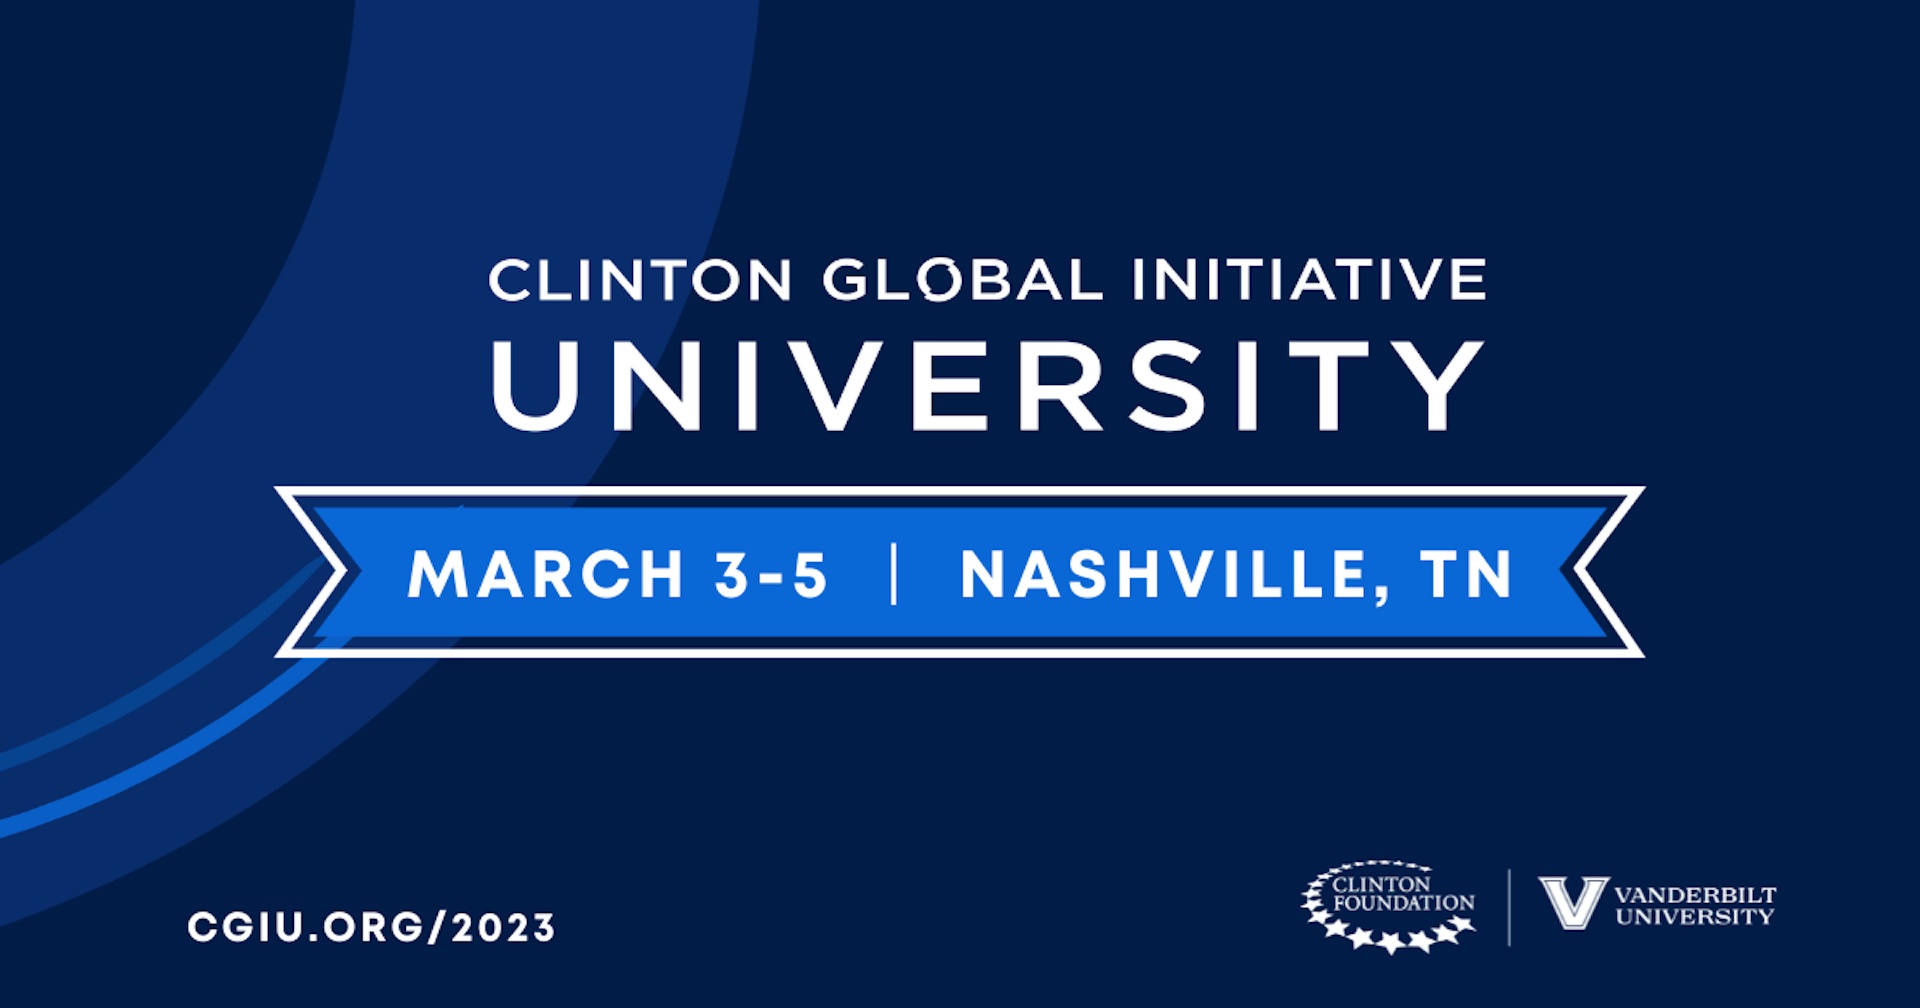 President Clinton, Secretary Clinton, Chelsea Clinton convene student leaders to drive action at 2023 CGI University meeting at Vanderbilt March 3–5